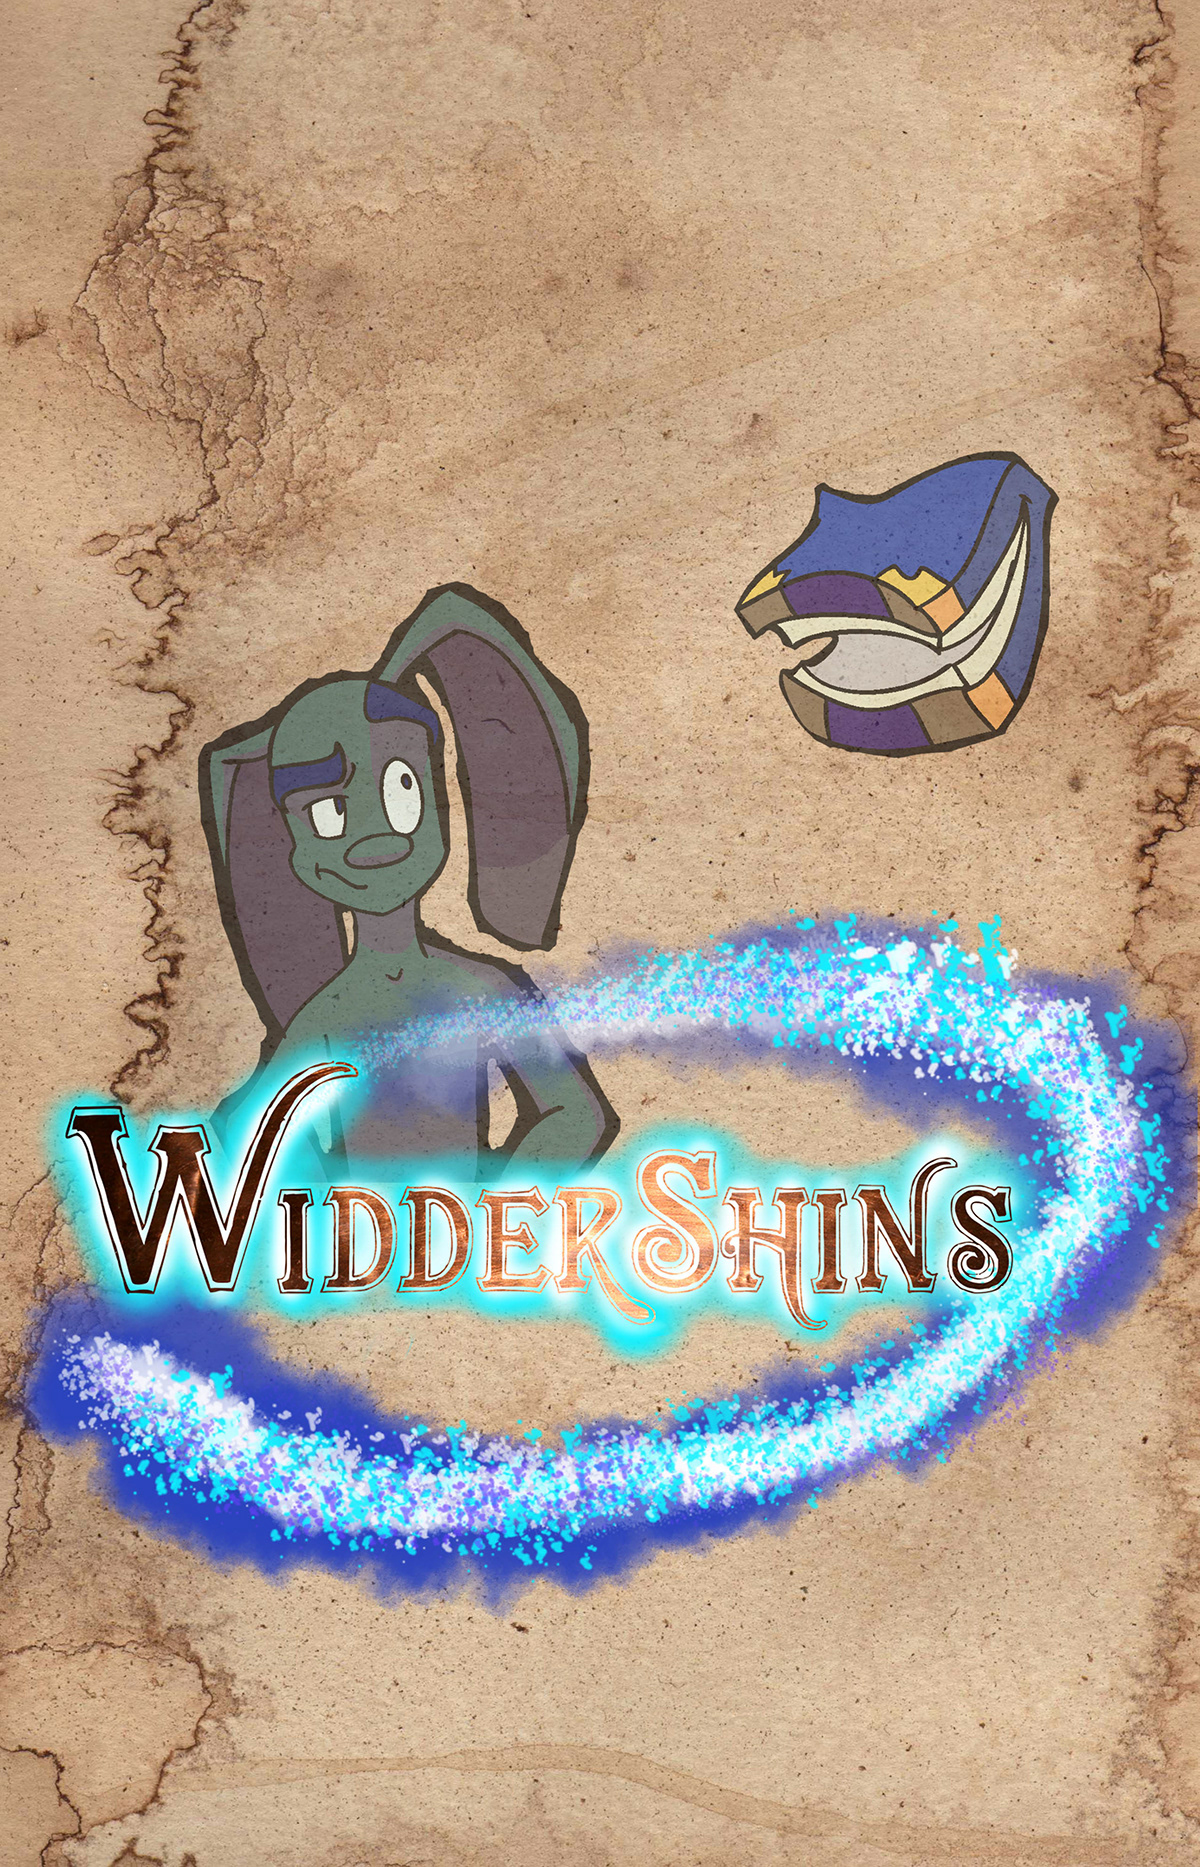 Widdershins Magic   Spells King Arthur Knights of the round table merlin goblins alternate universe series pitch